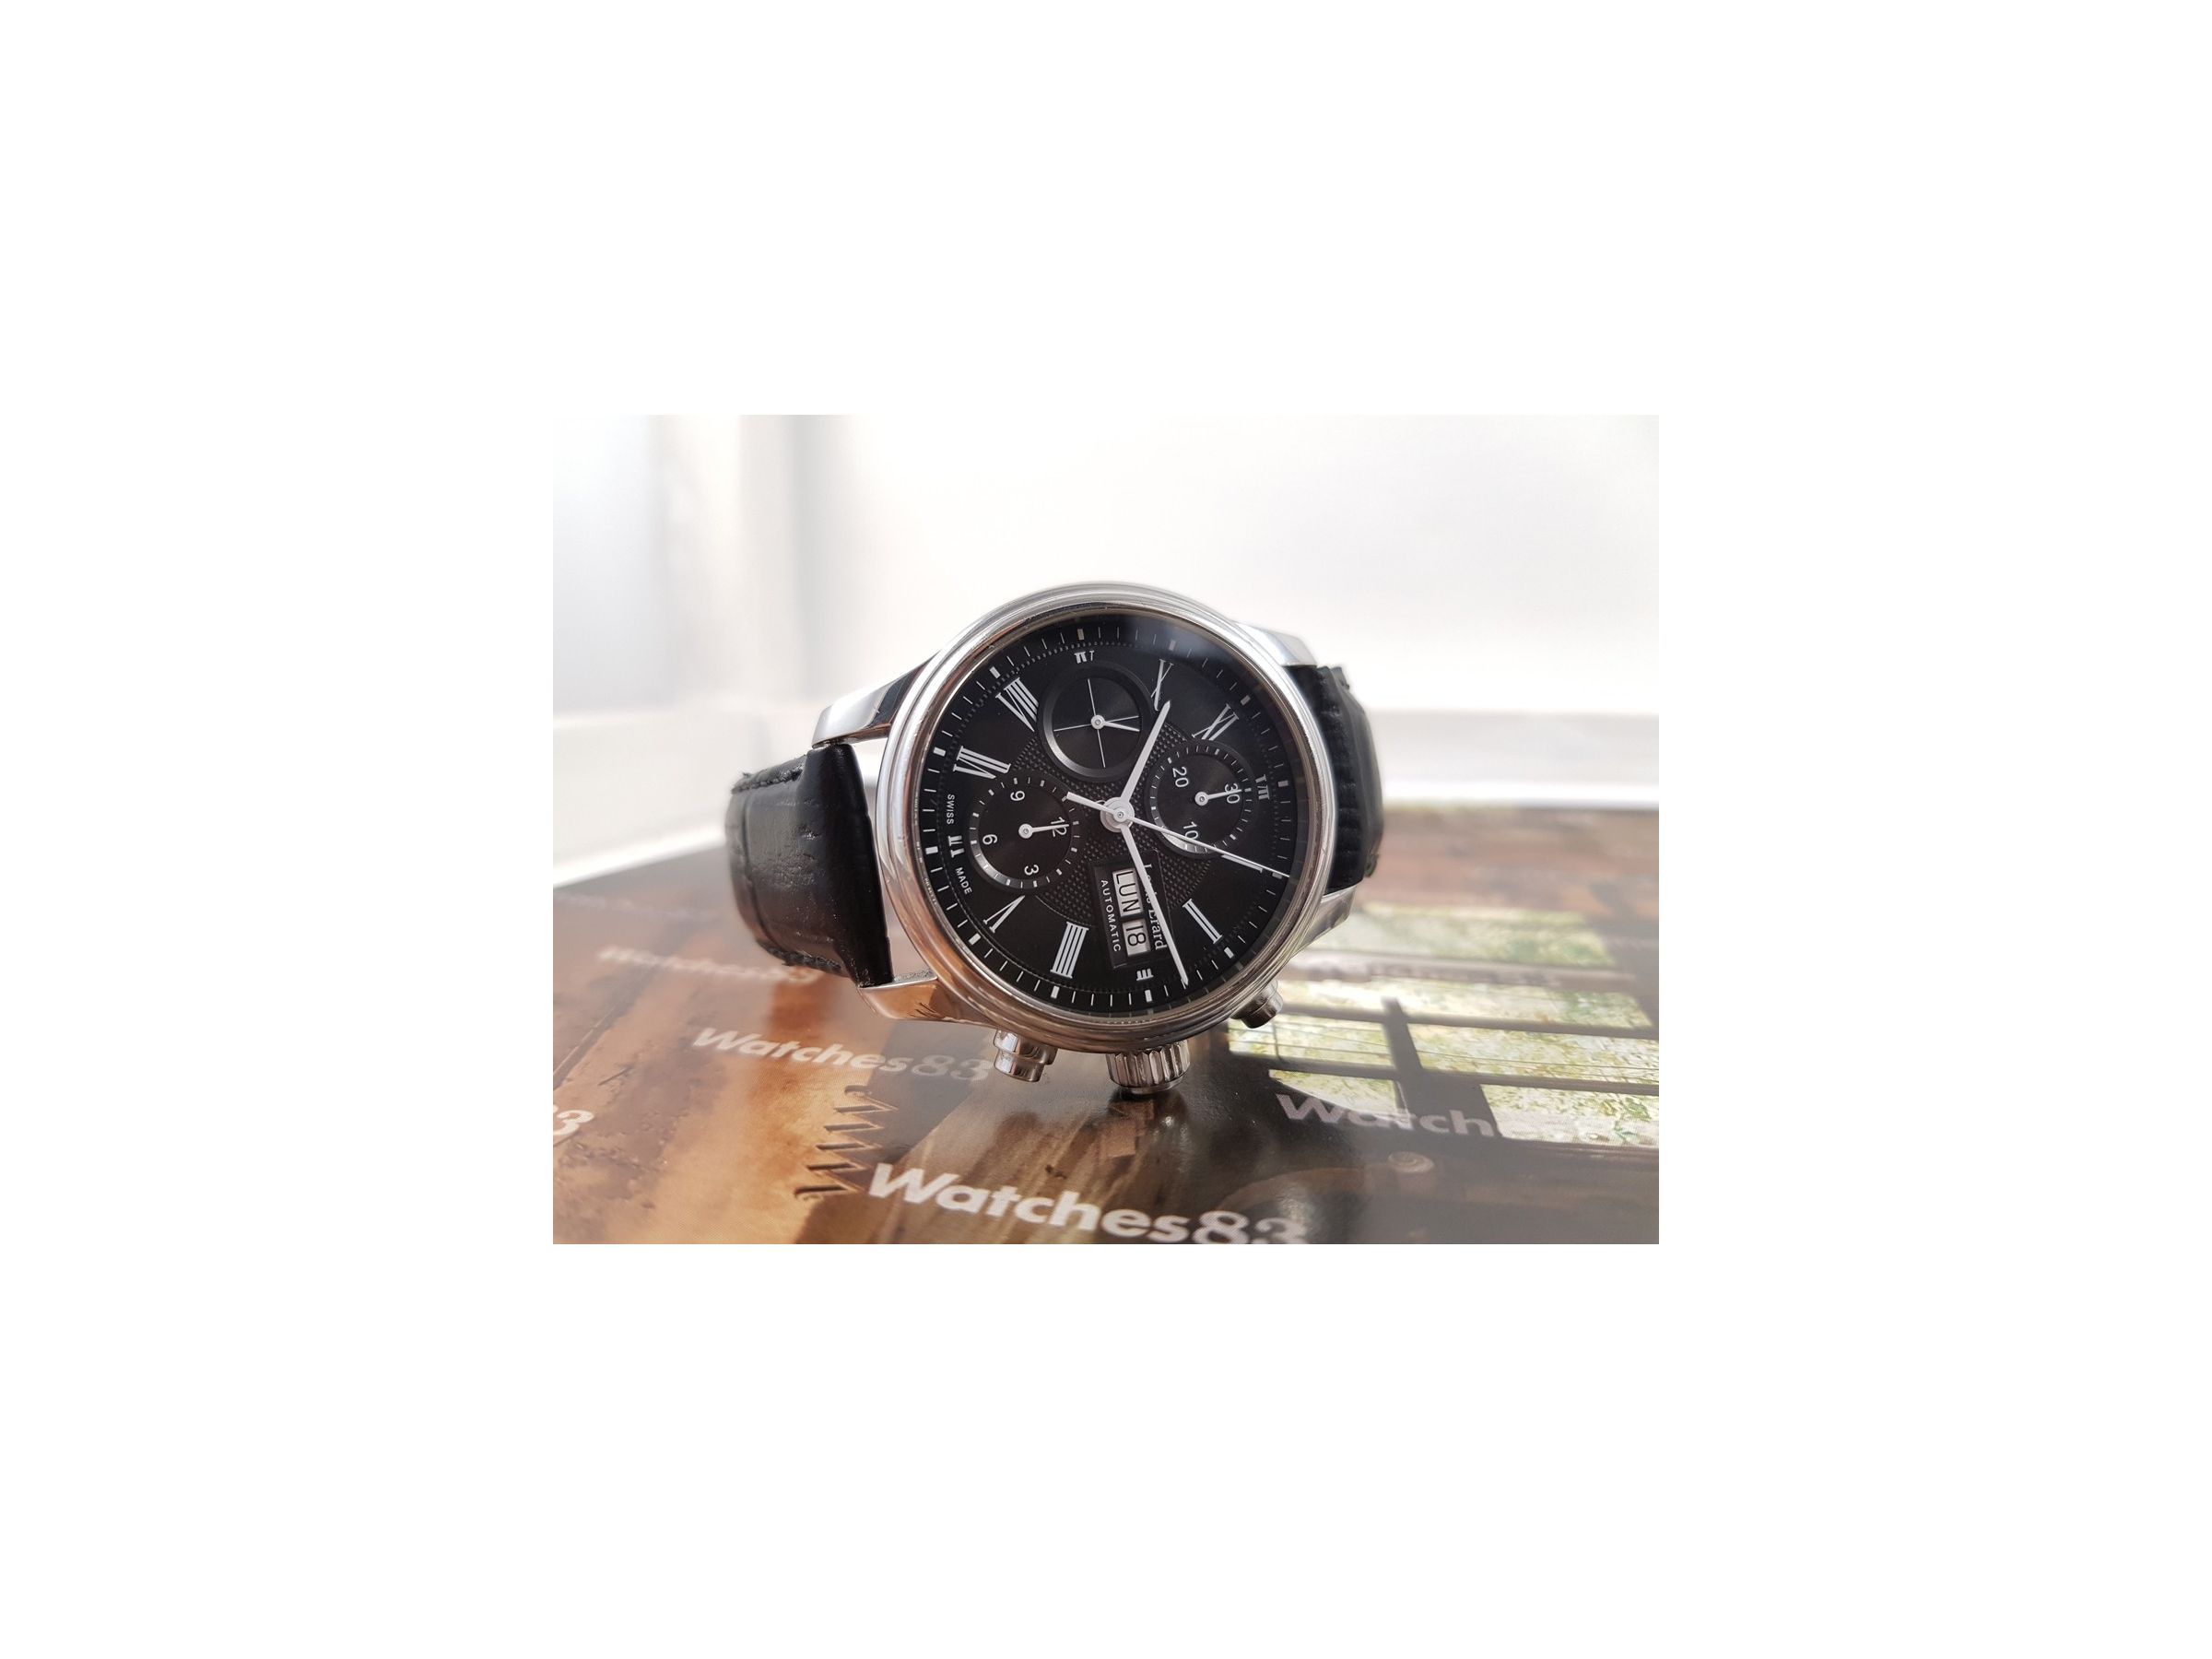 Louis Erard Men's 78259AA22.BDC02 Heritage Chronograph Automatic Watch